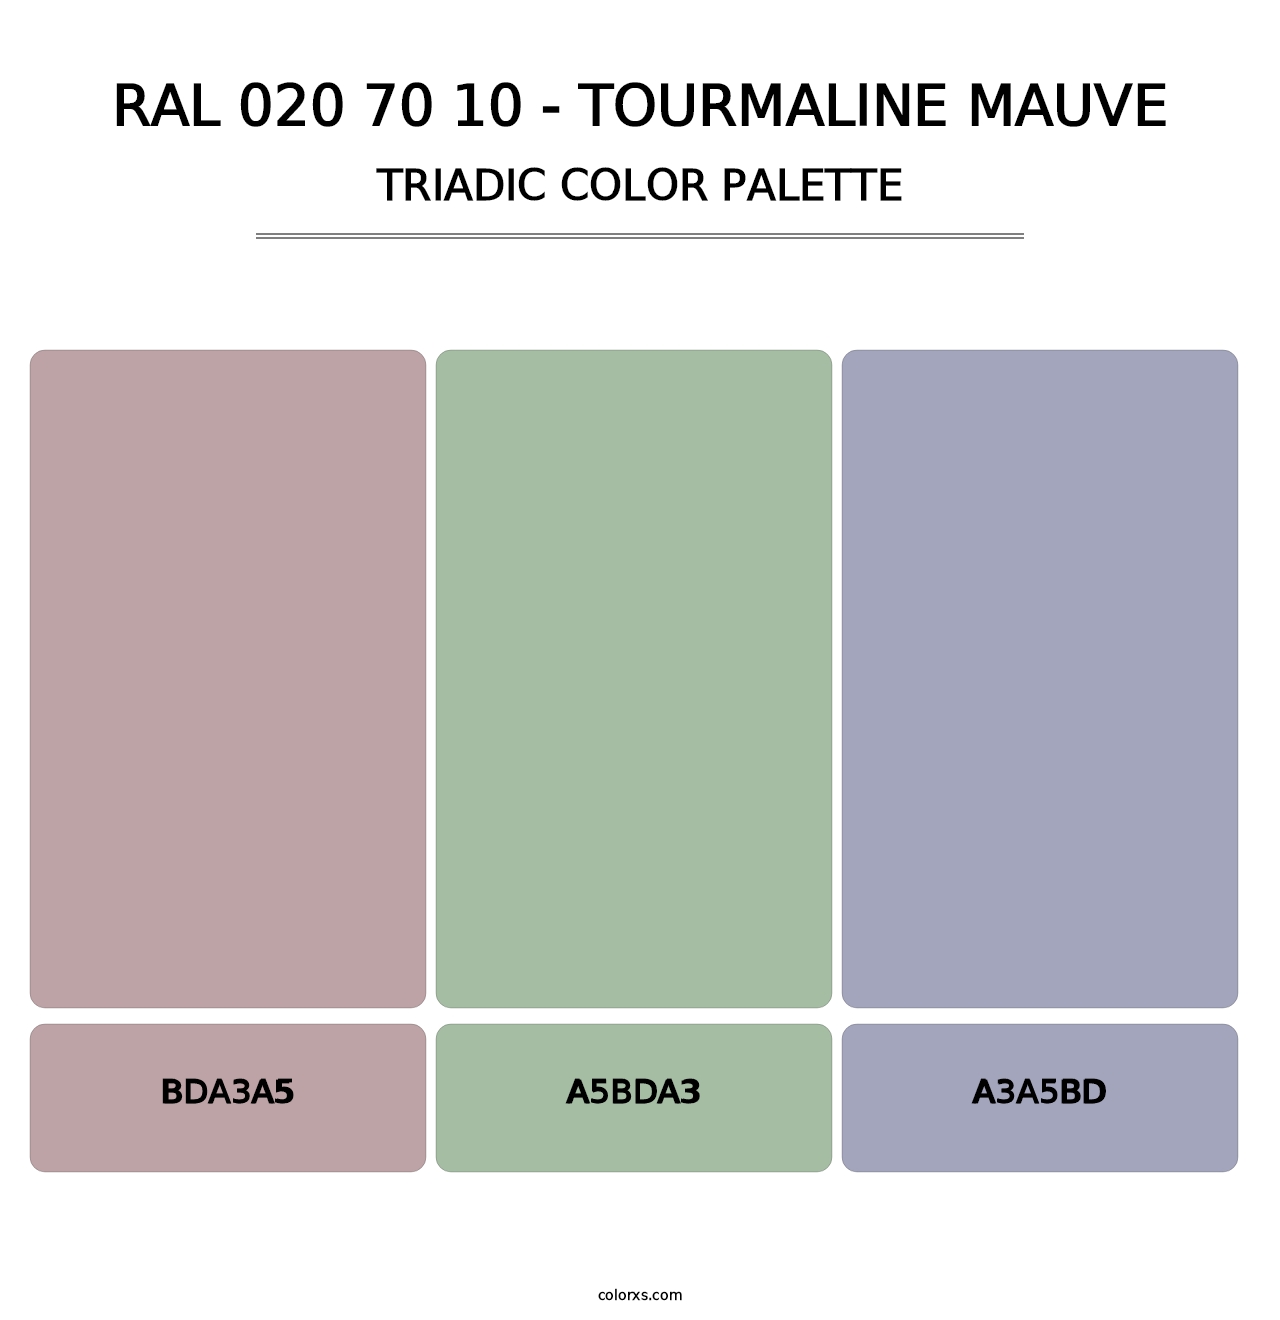 RAL 020 70 10 - Tourmaline Mauve - Triadic Color Palette